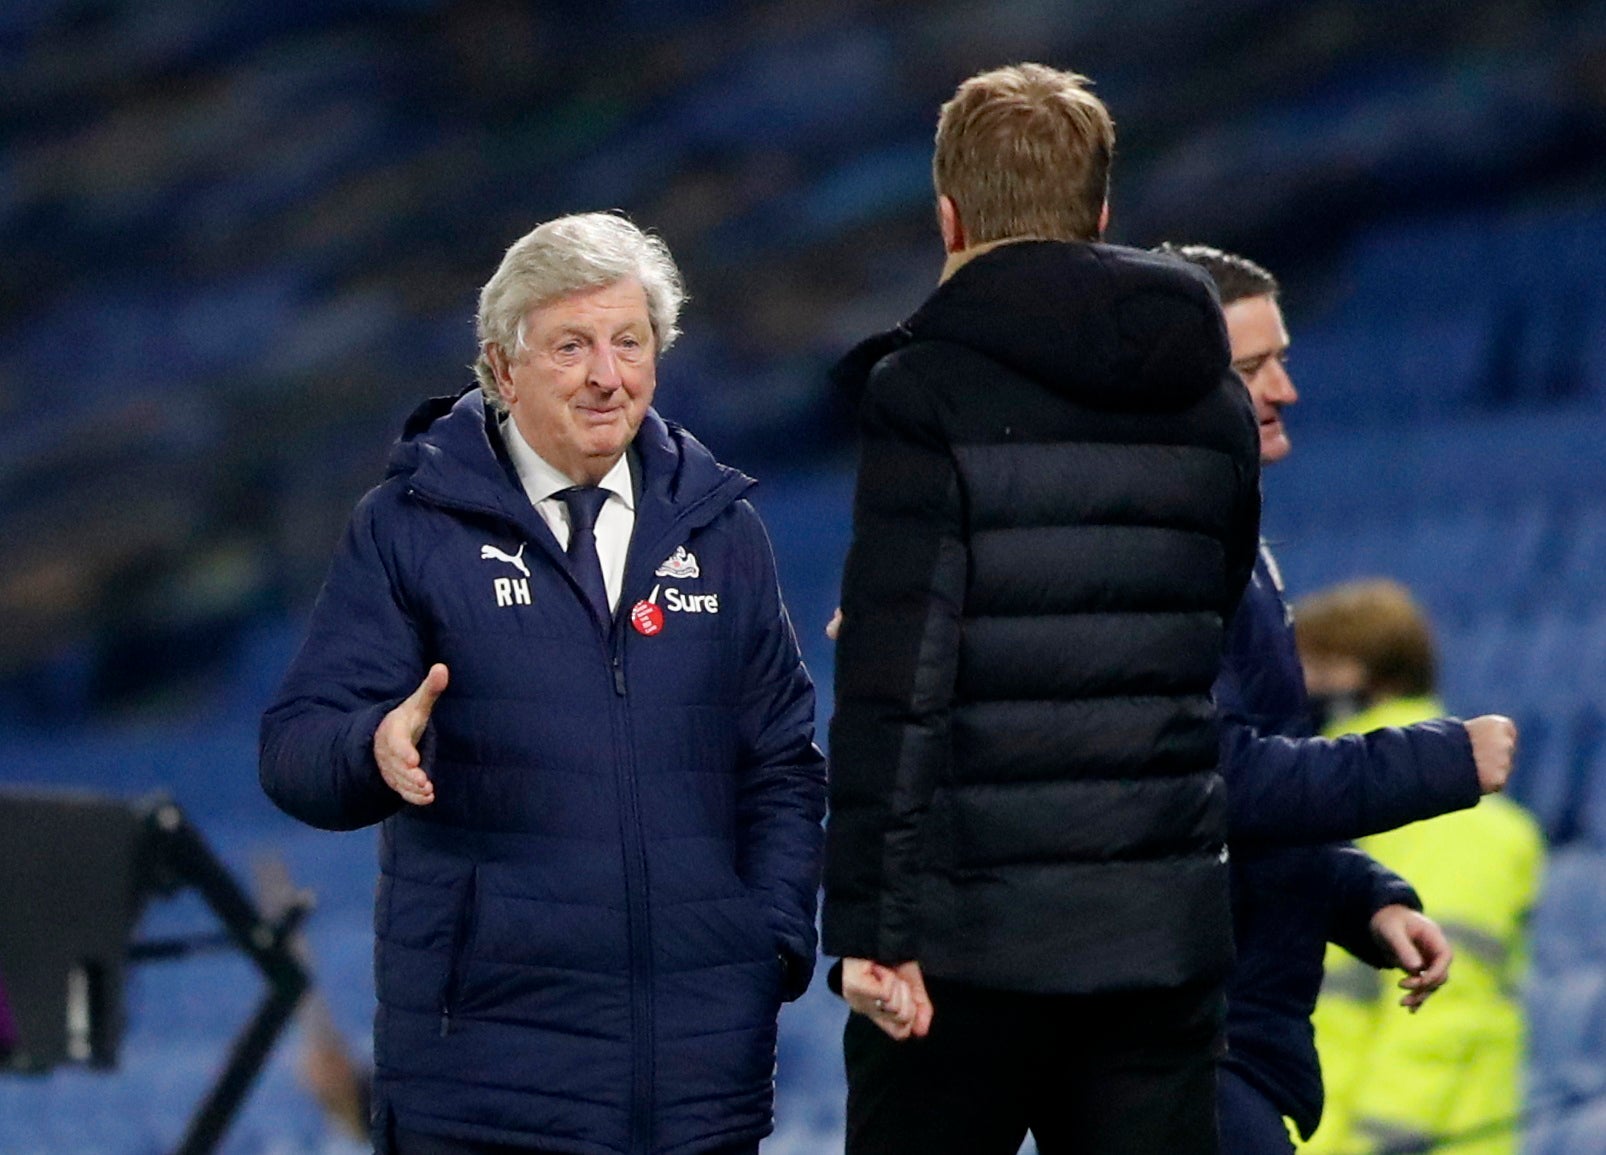 Roy Hodgson goes to shake Graham Potter’s hand